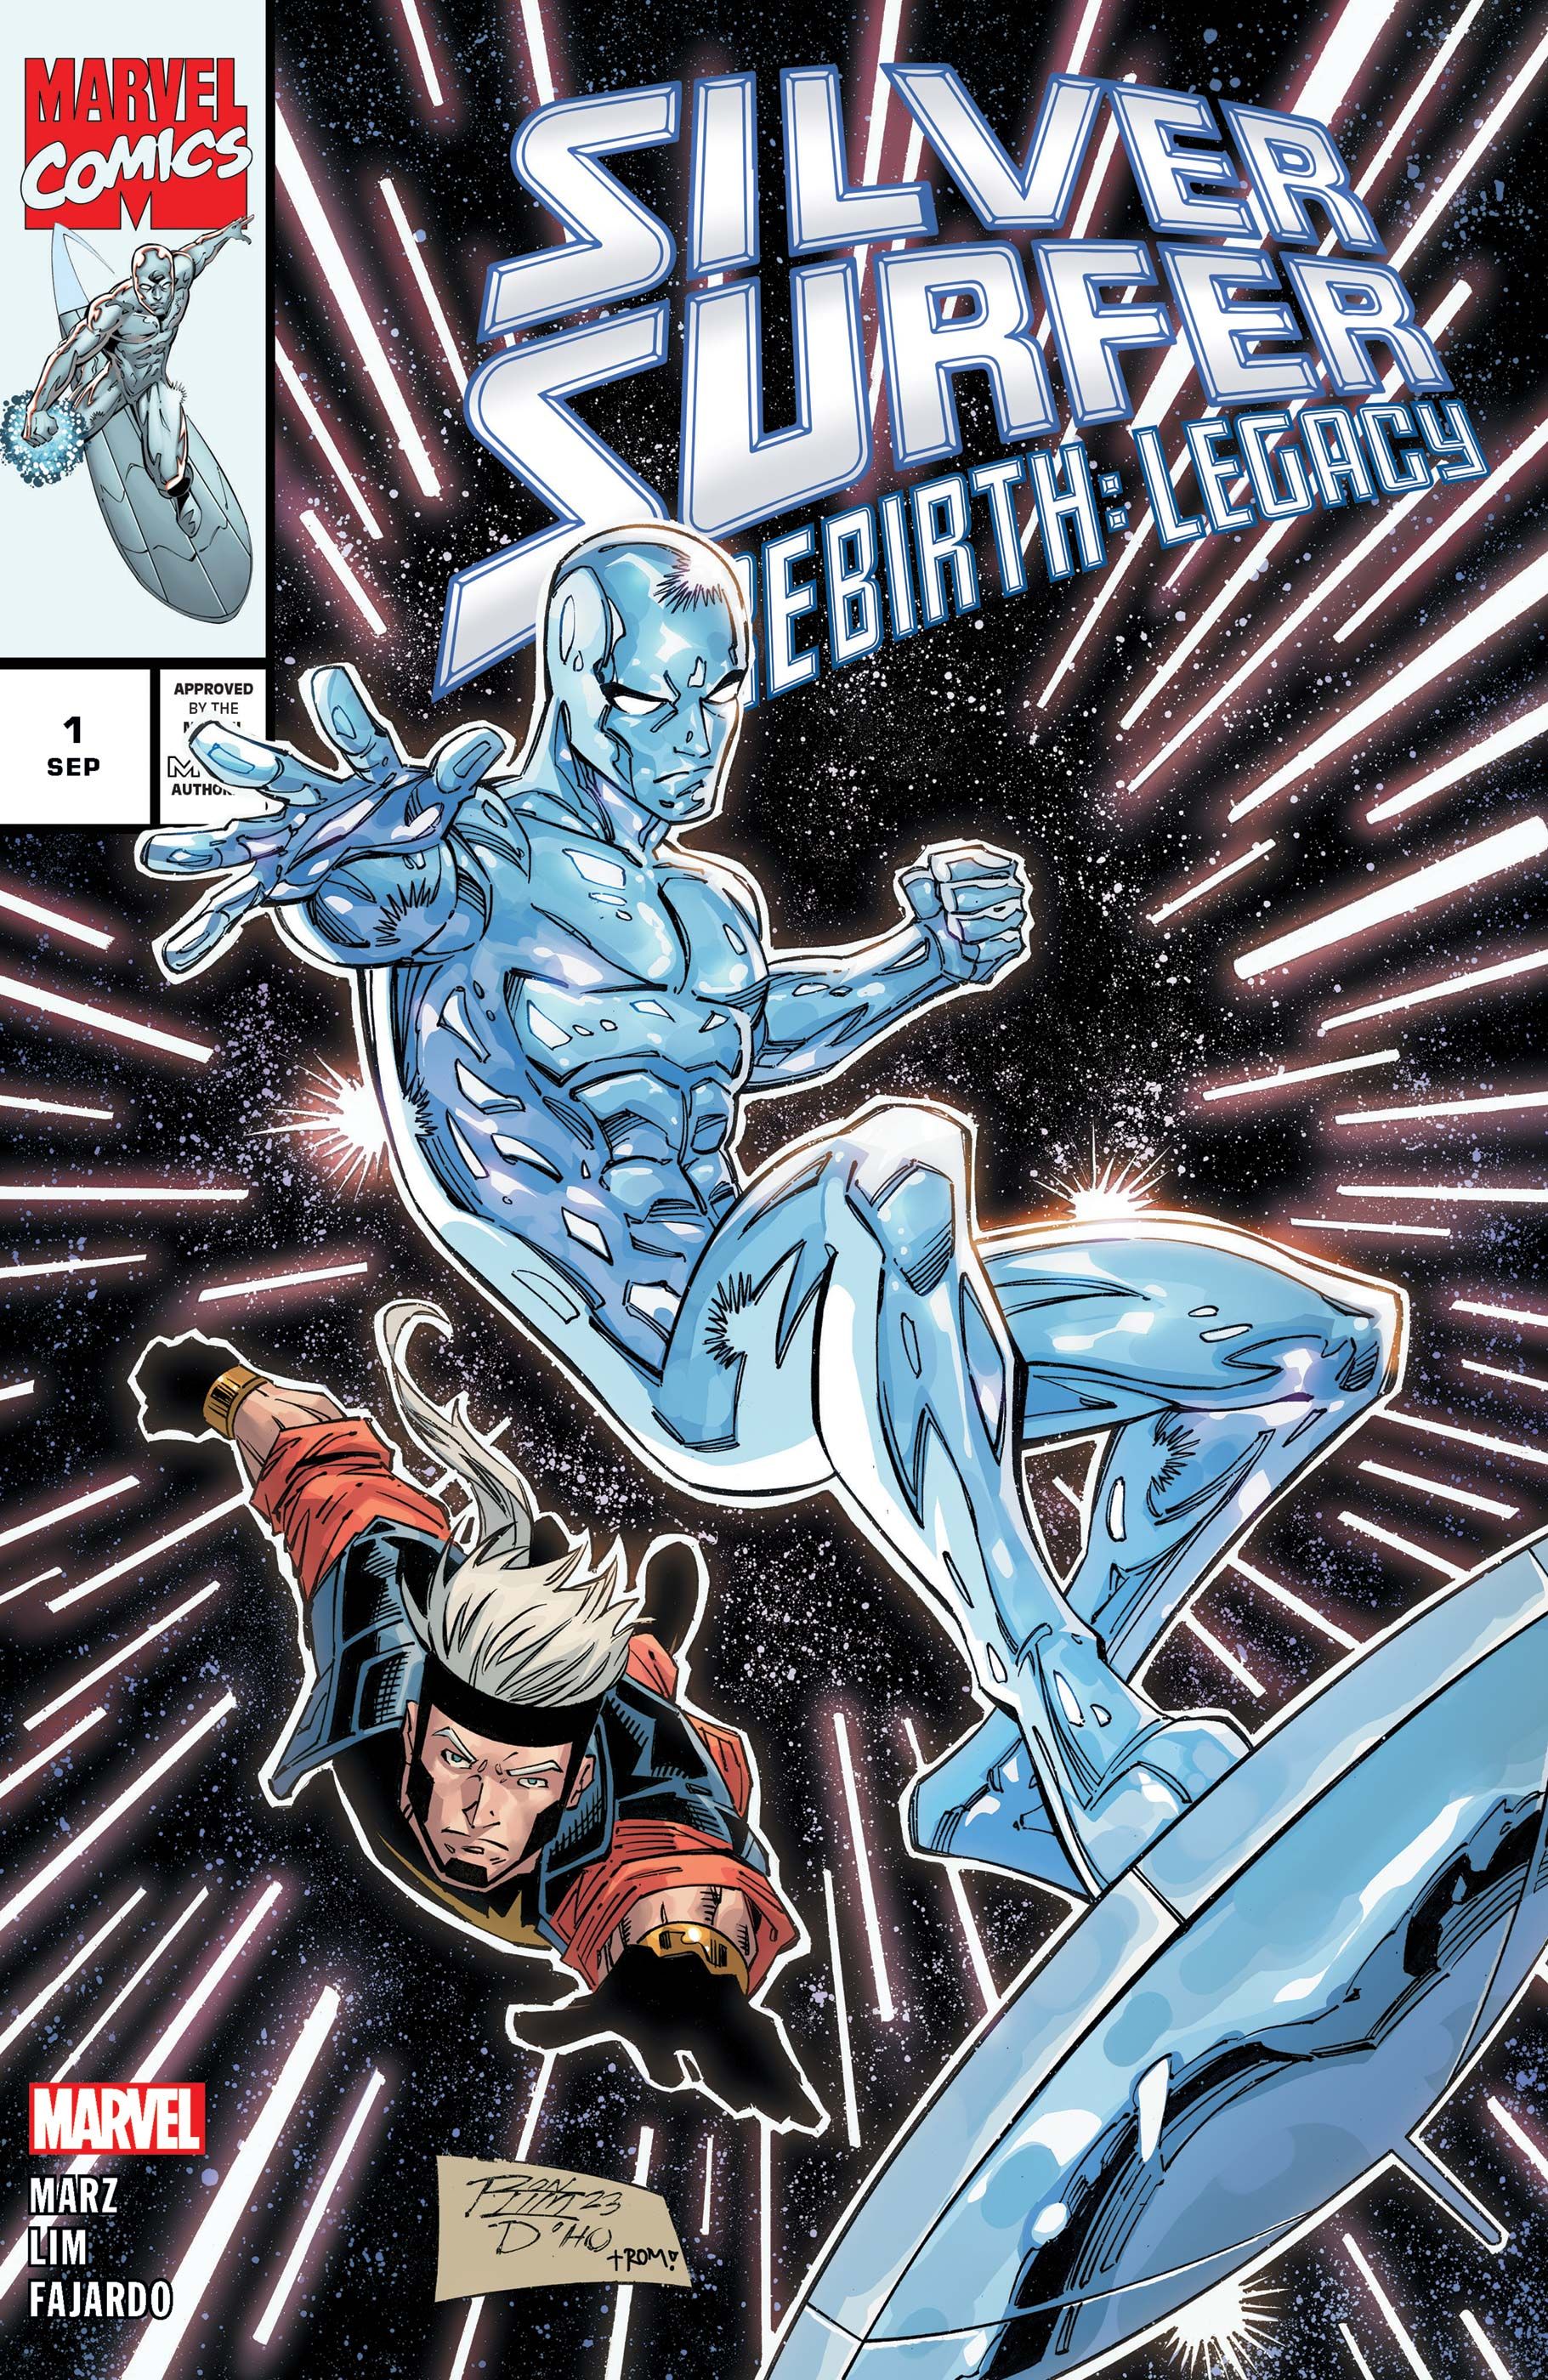 RESEÑA: Marvel's Silver Surfer Rebirth: Legacy #1